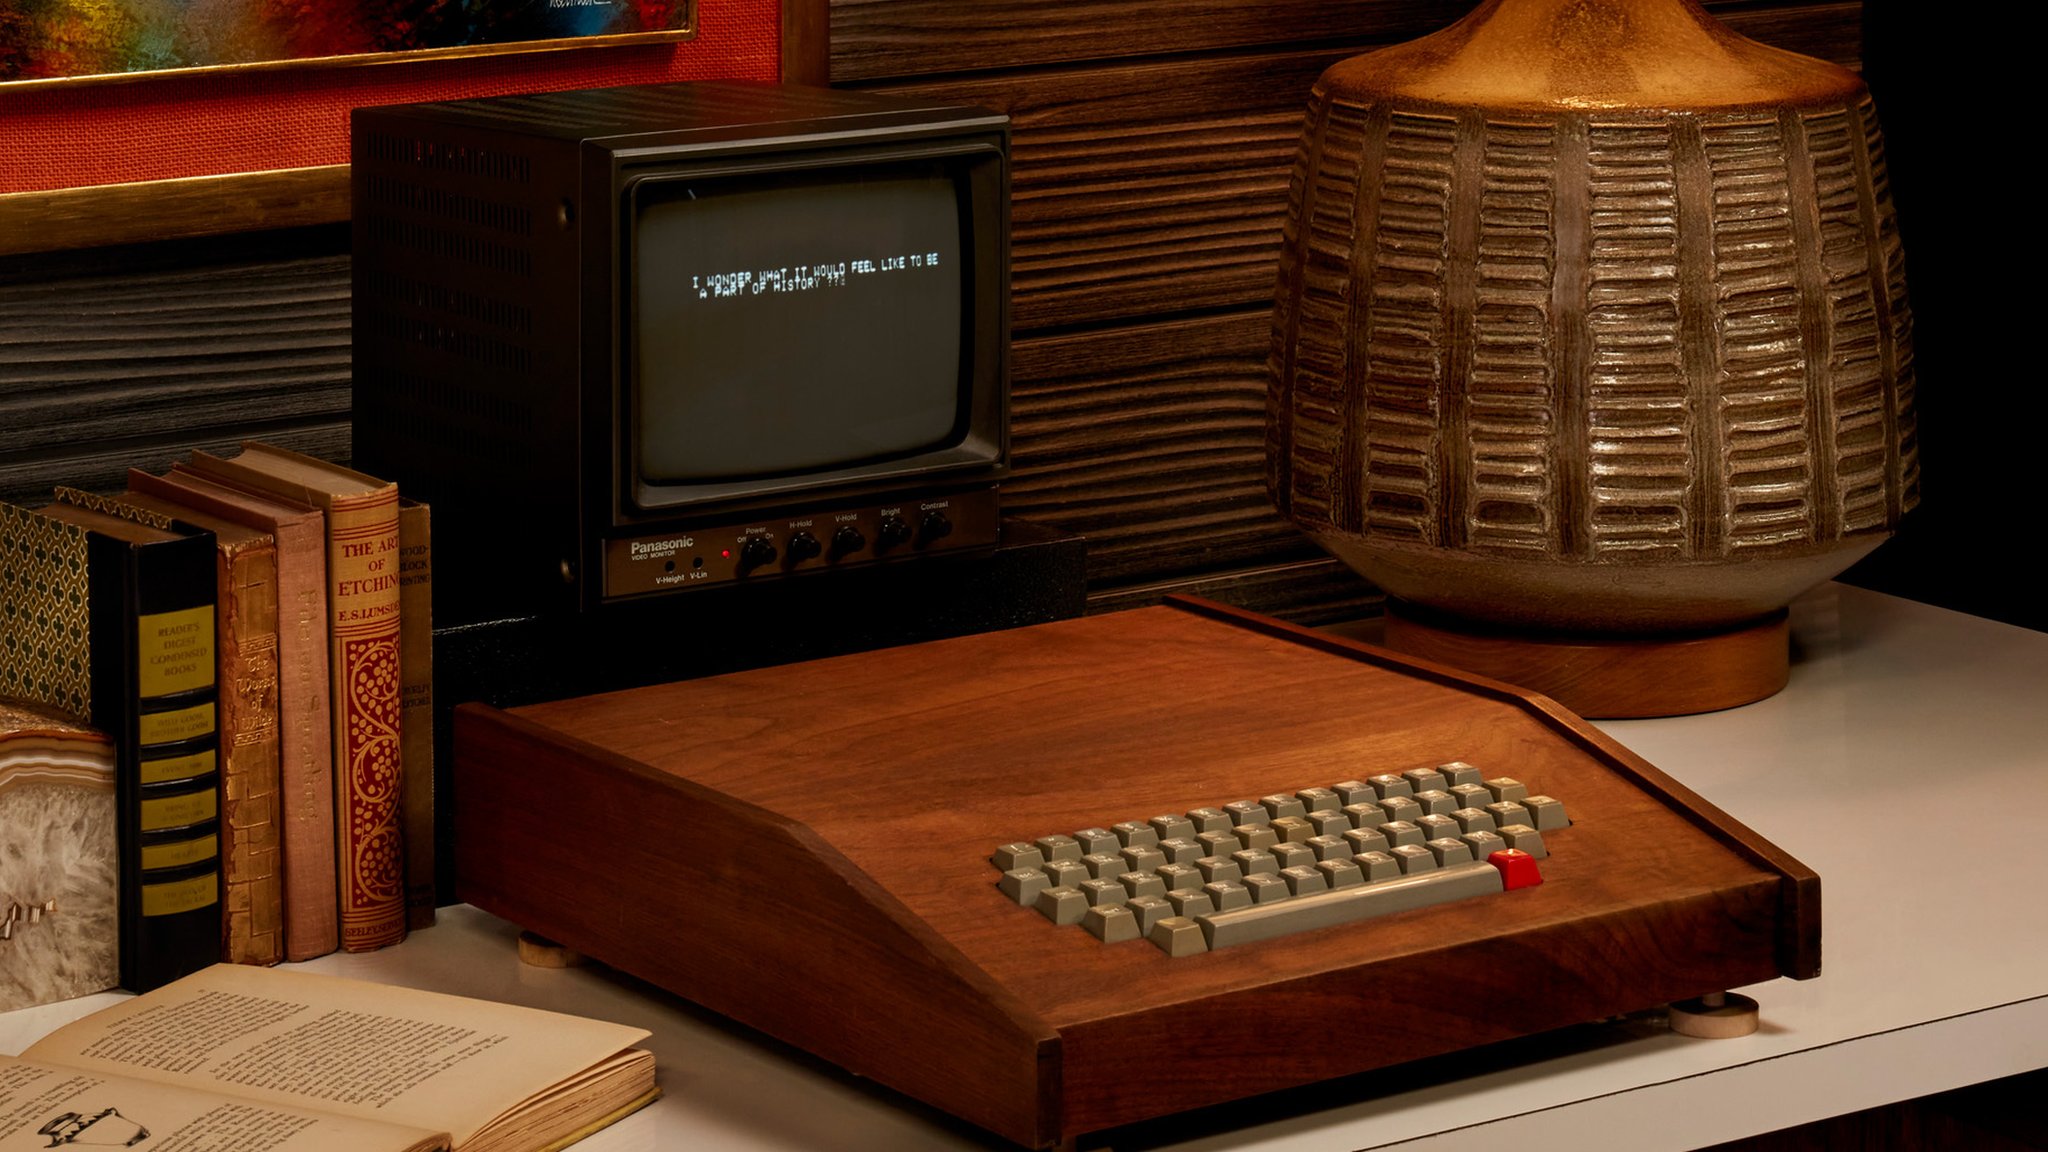 Apple's original computer fetches $400,000 at US auction - BBC News